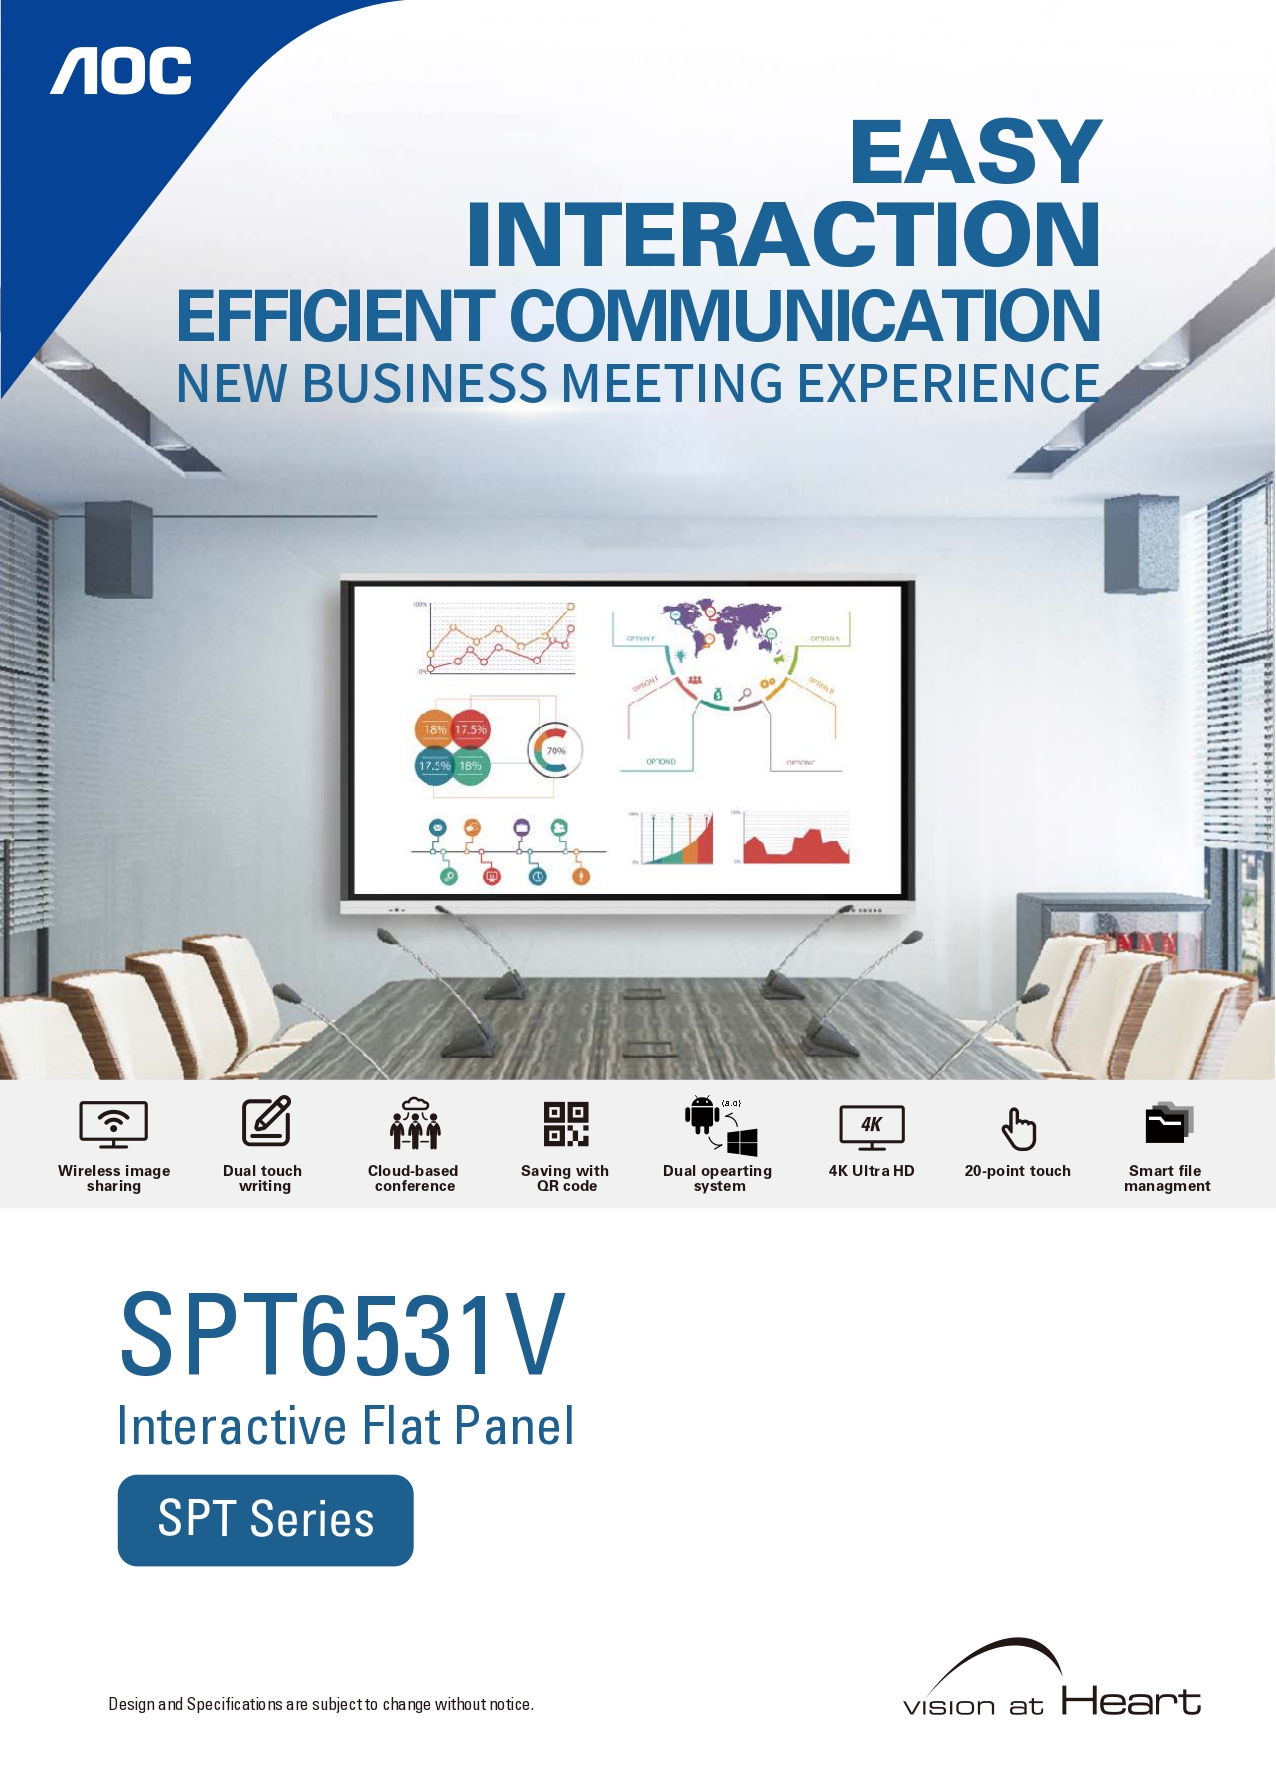 AOC SPT6531V Interactive Flat Panel SPT Series